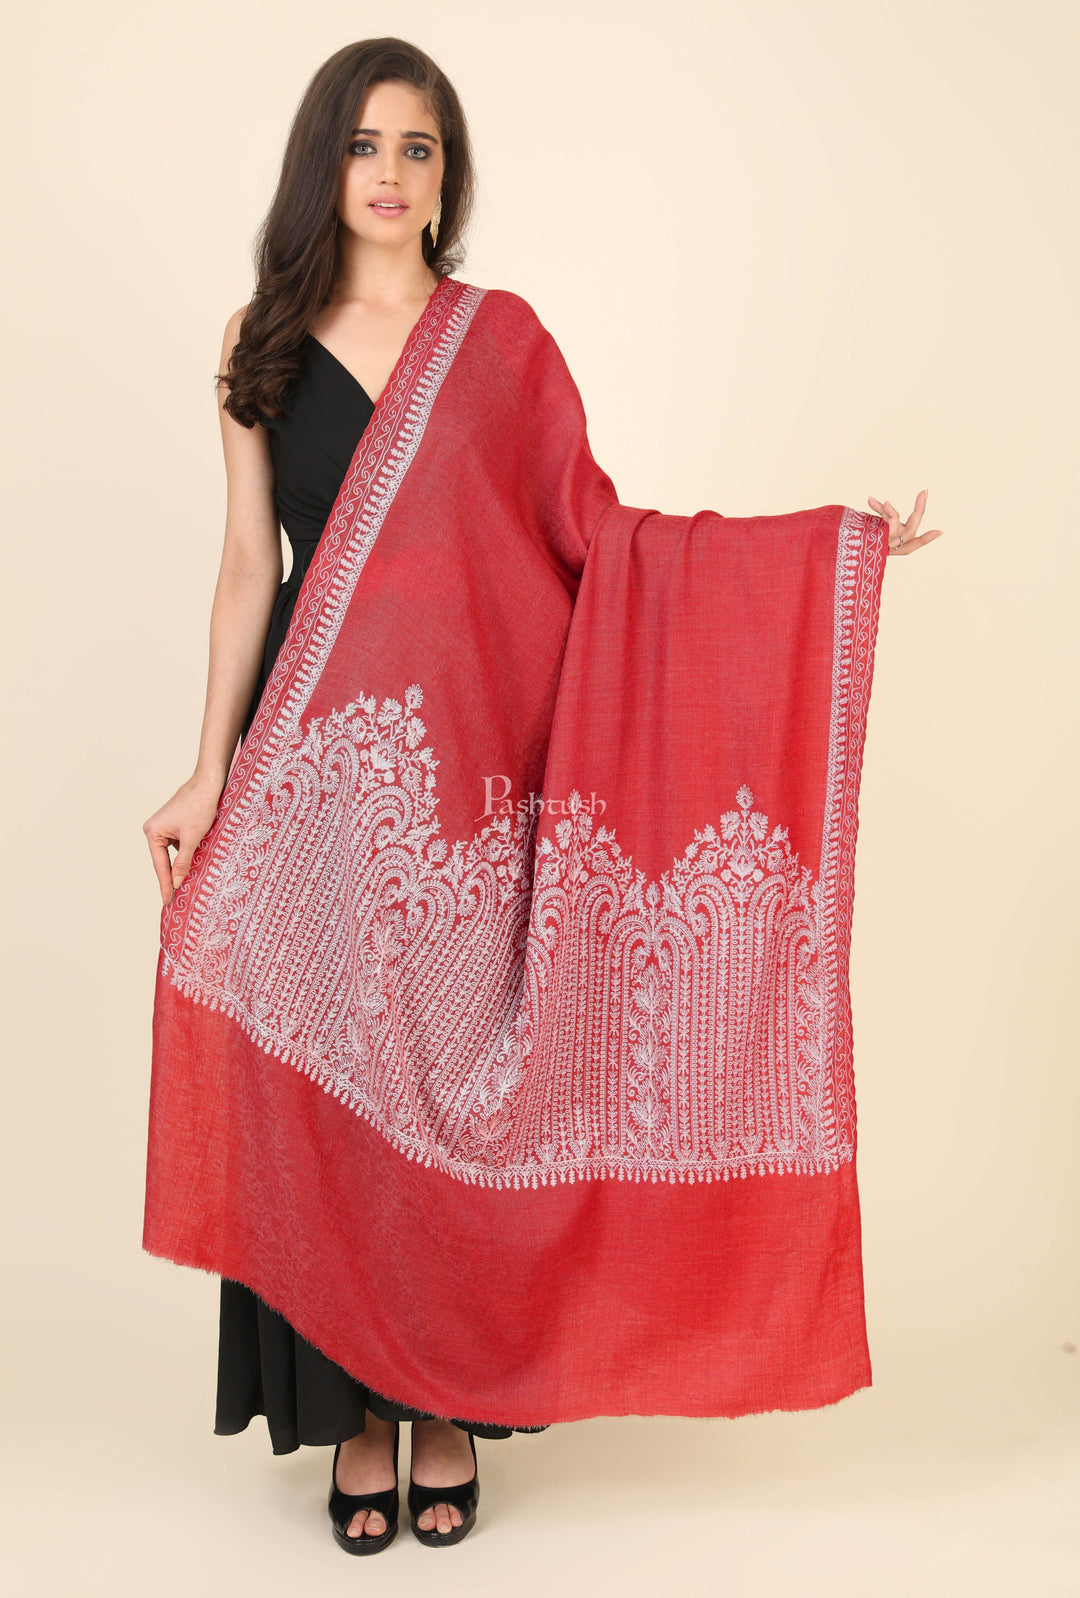 Pashtush India Womens Shawls Pashtush Womens Fine Wool Shawl, With Tone On Tone Nalki Embroidery, Soft And Warm, Red